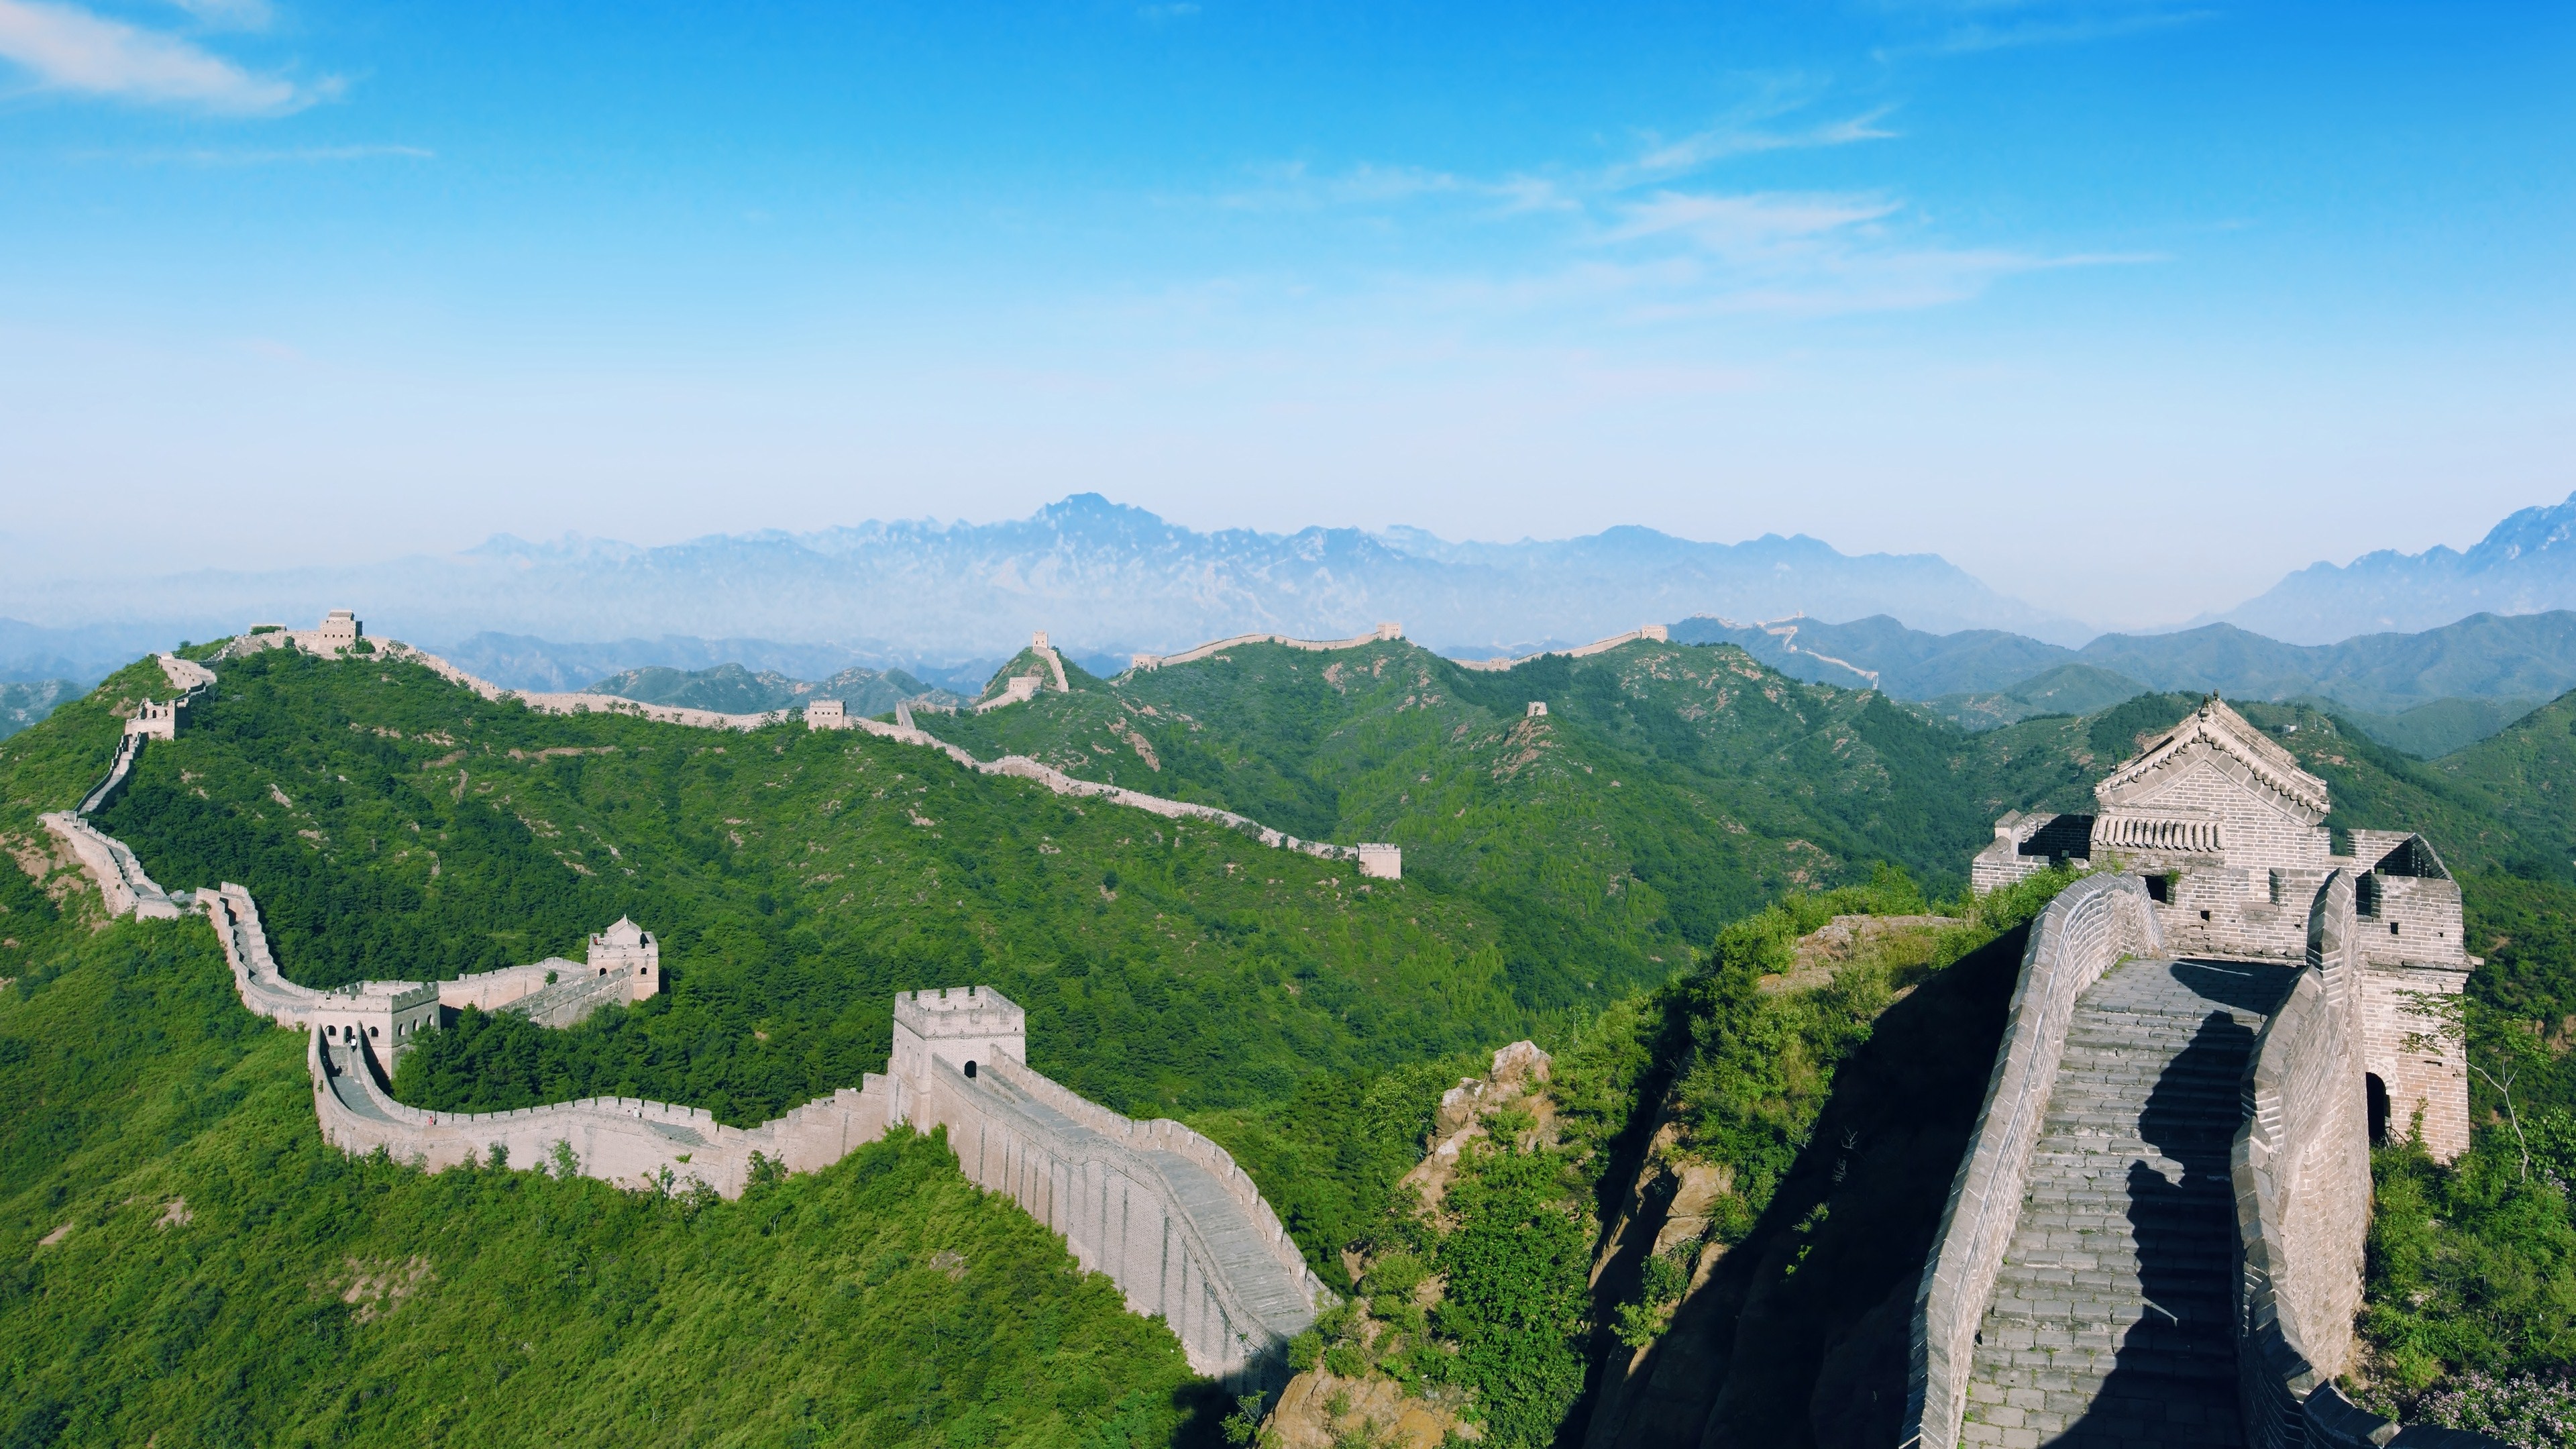 Great Wall Of China Puter Wallpaper Desktop Background